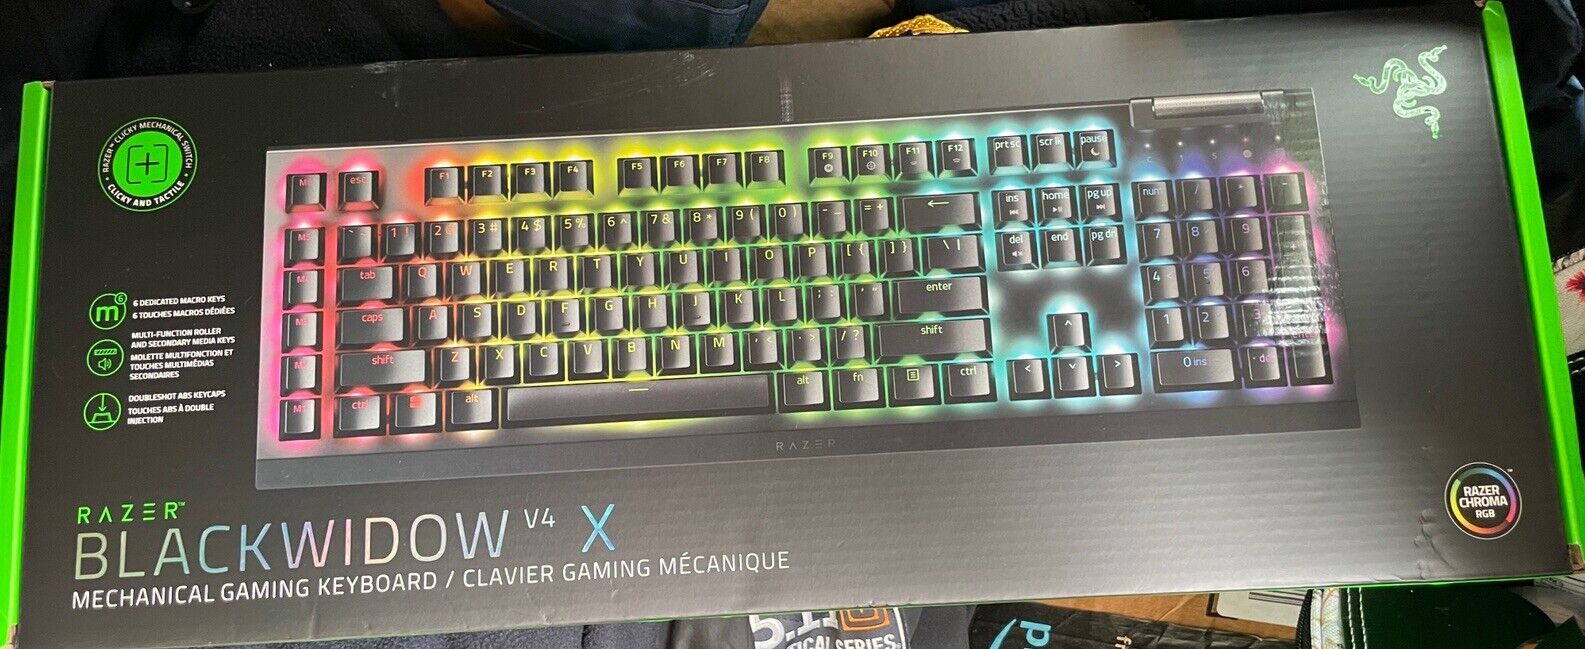 Razer BlackWidow V4 X Mechanical Gaming Keyboard w/ Green Switches & Chroma RGB